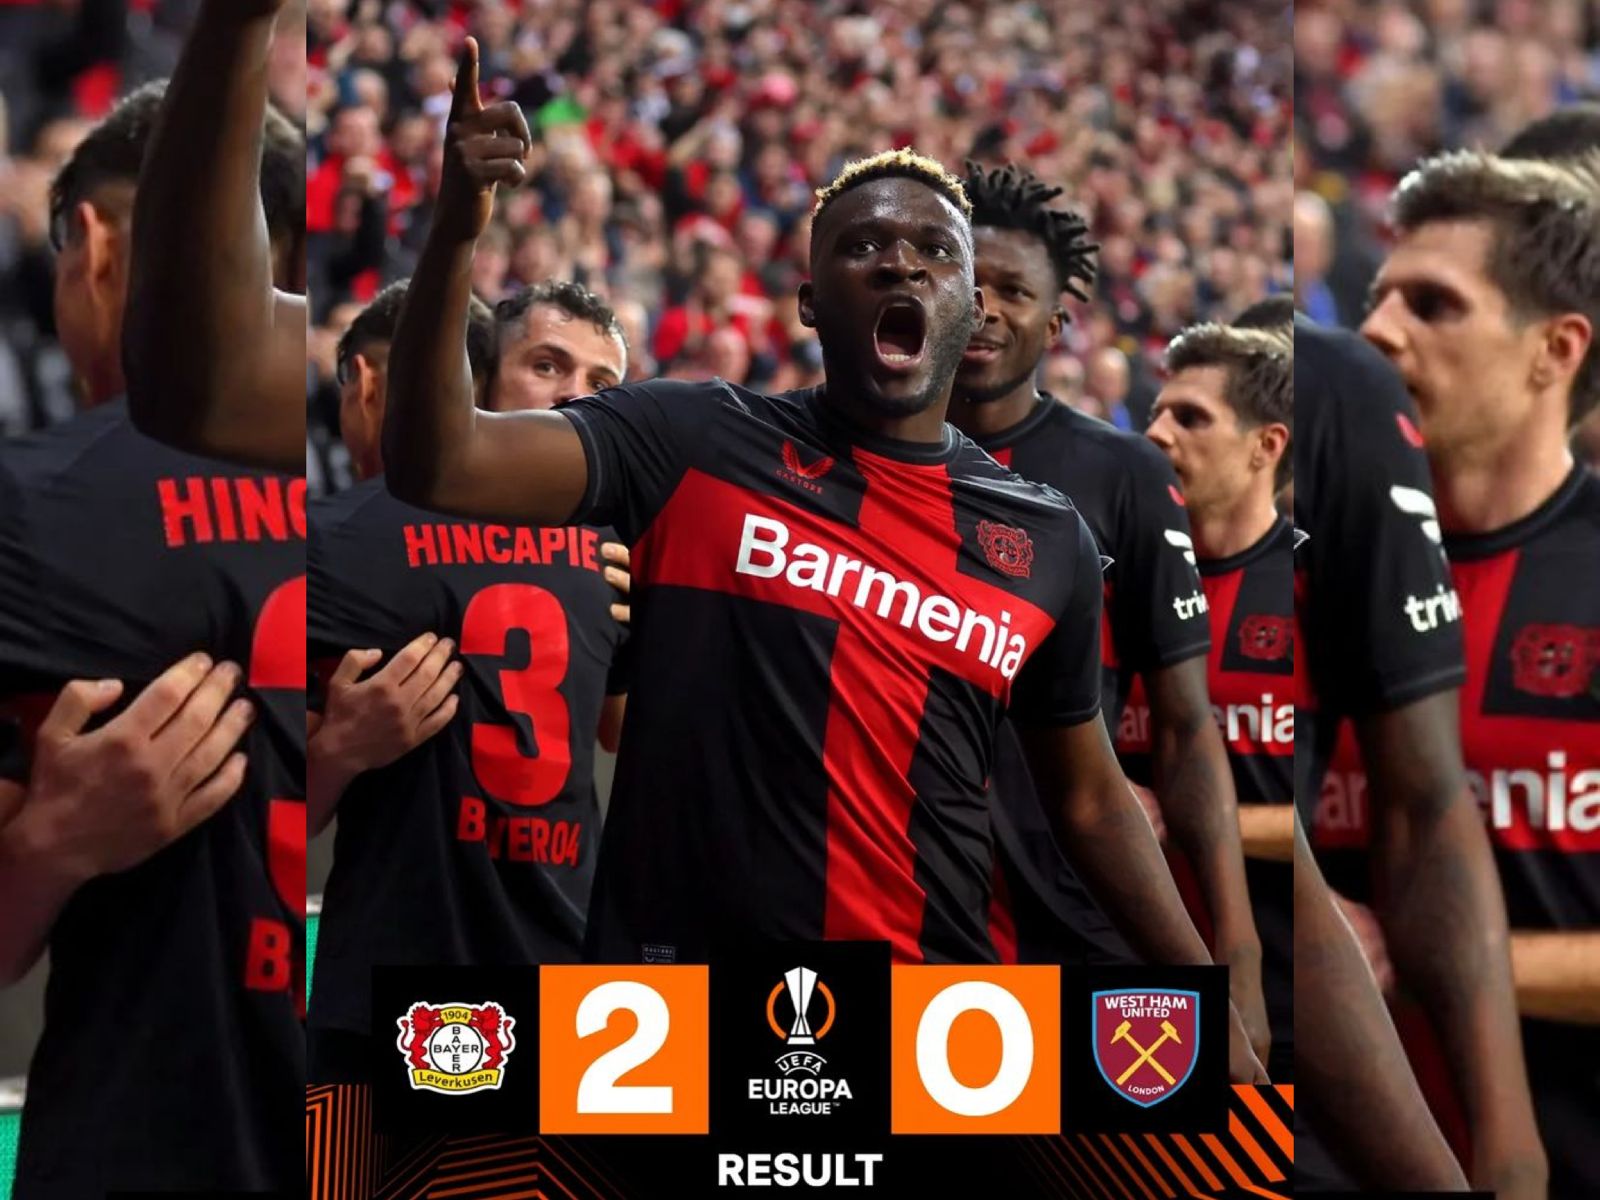 Hasil Perempat Final Liga Europa Bayer Leverkusen vs West Ham, Die Werkself Menang 2-0 